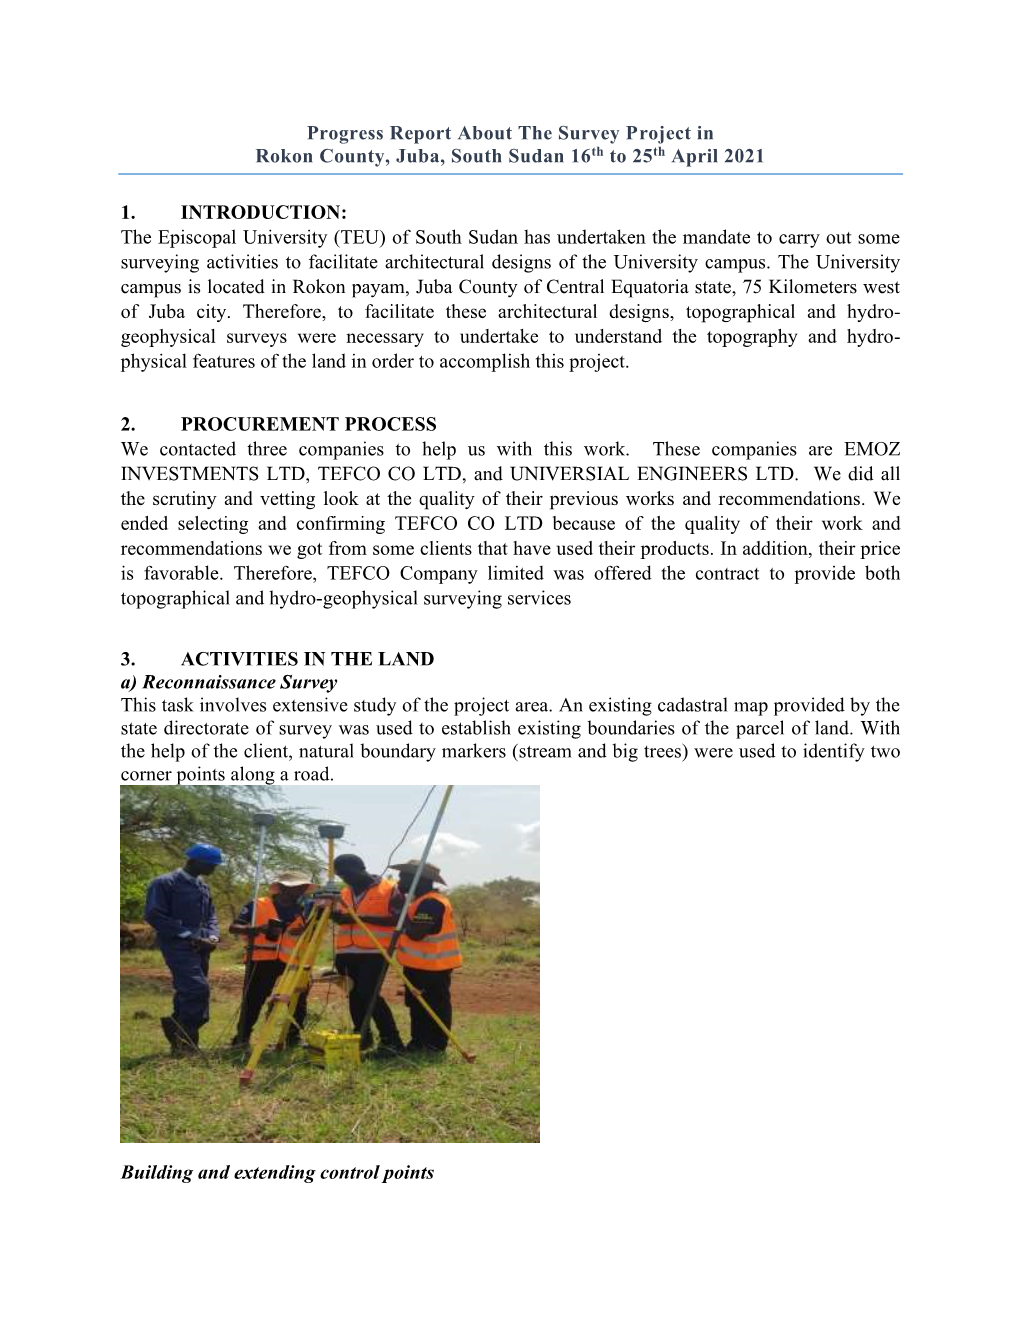 Progress Report About the Survey Project in Rokon County, Juba, South Sudan 16Th to 25Th April 2021